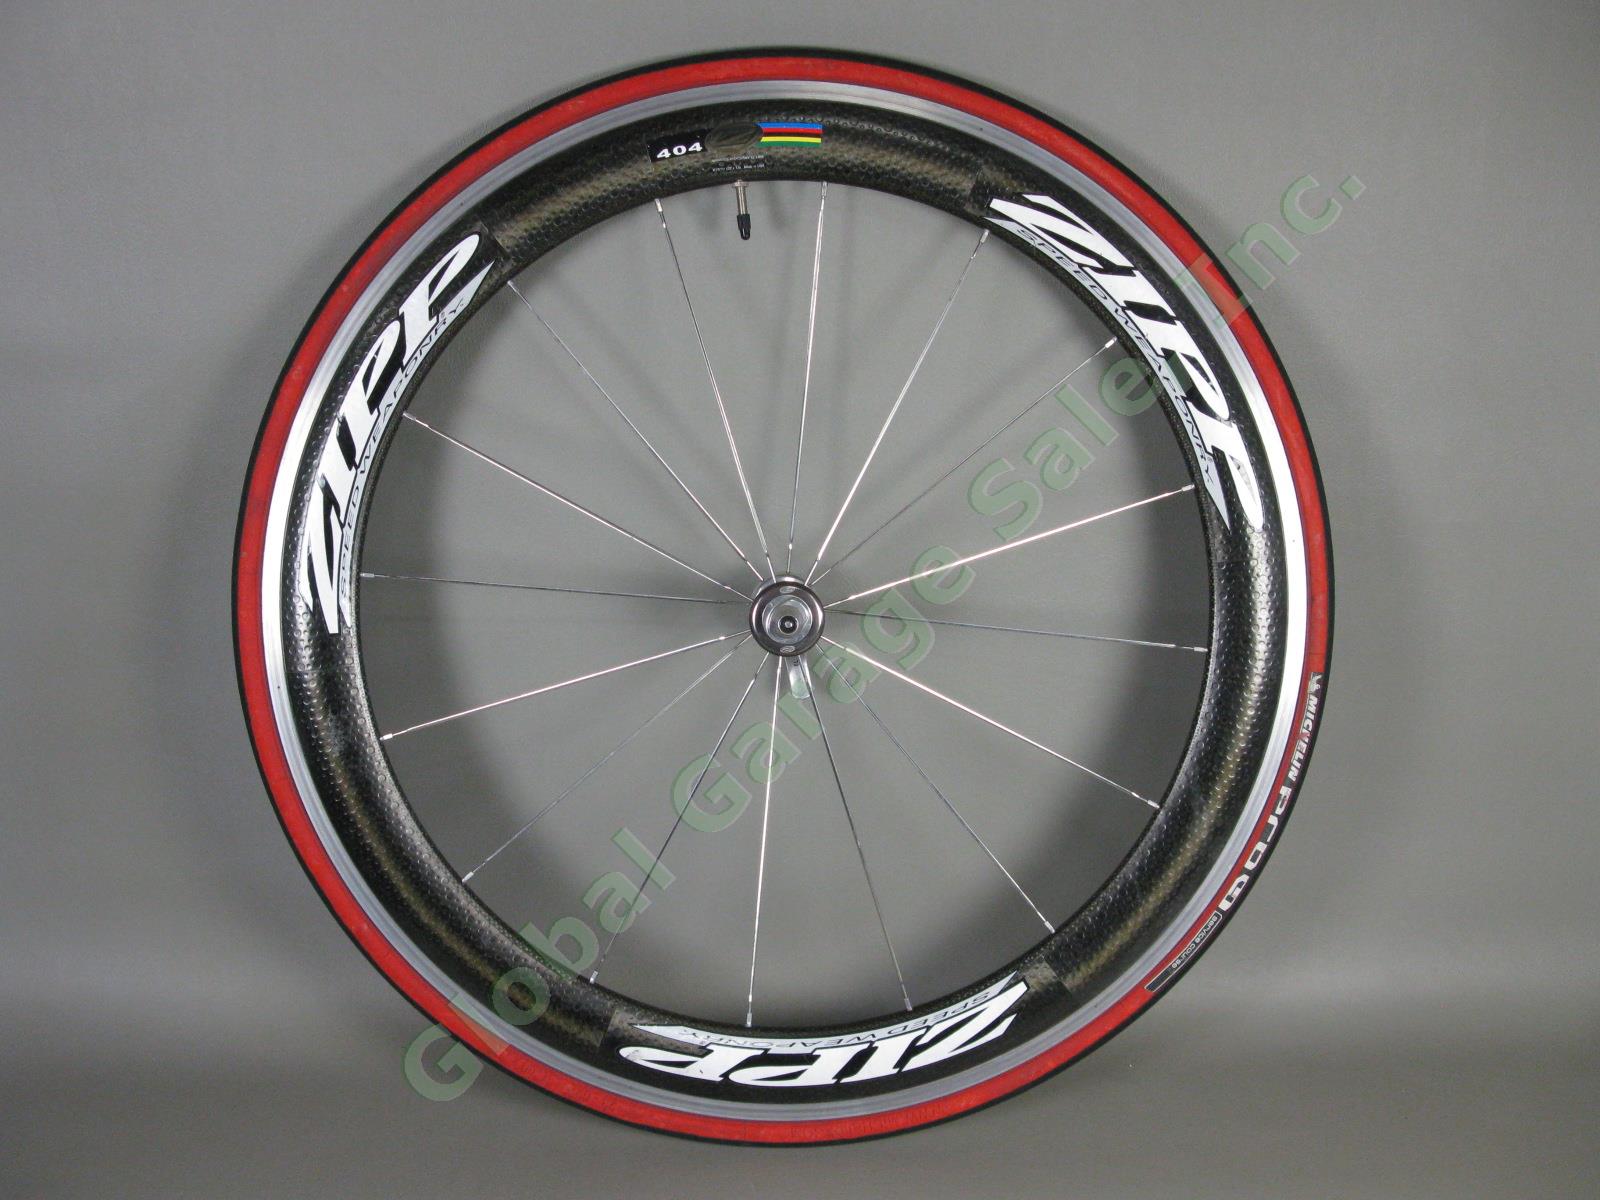 Zipp 404 Carbon Clincher Front Bike Wheel 16-Spoke 622x13C 700C Michelin Pro 4 4